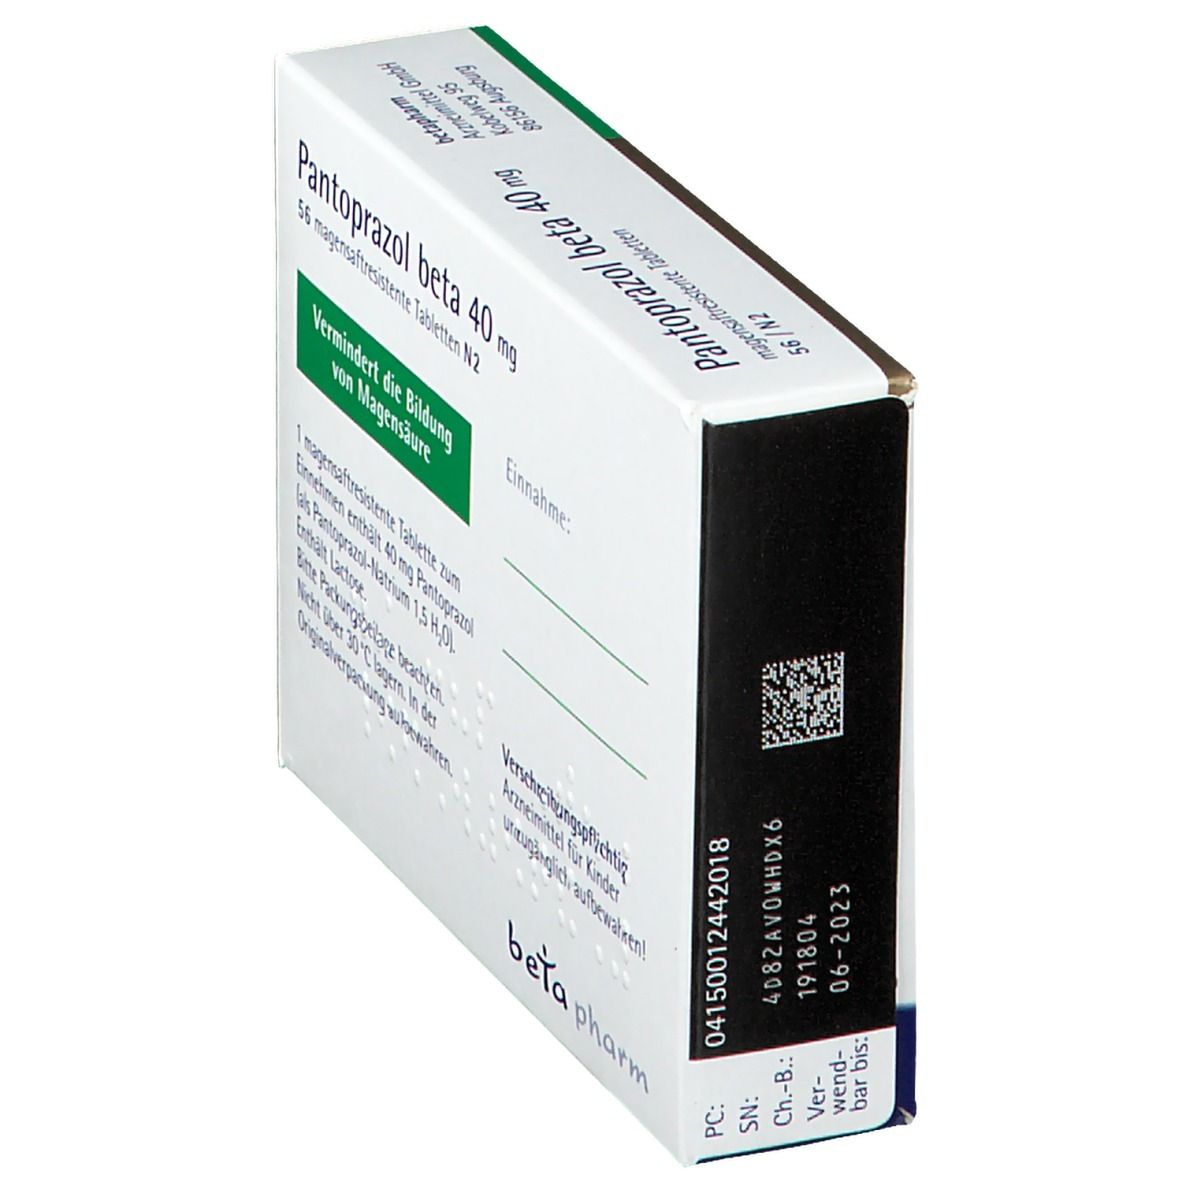 Pantoprazol beta 40 mg